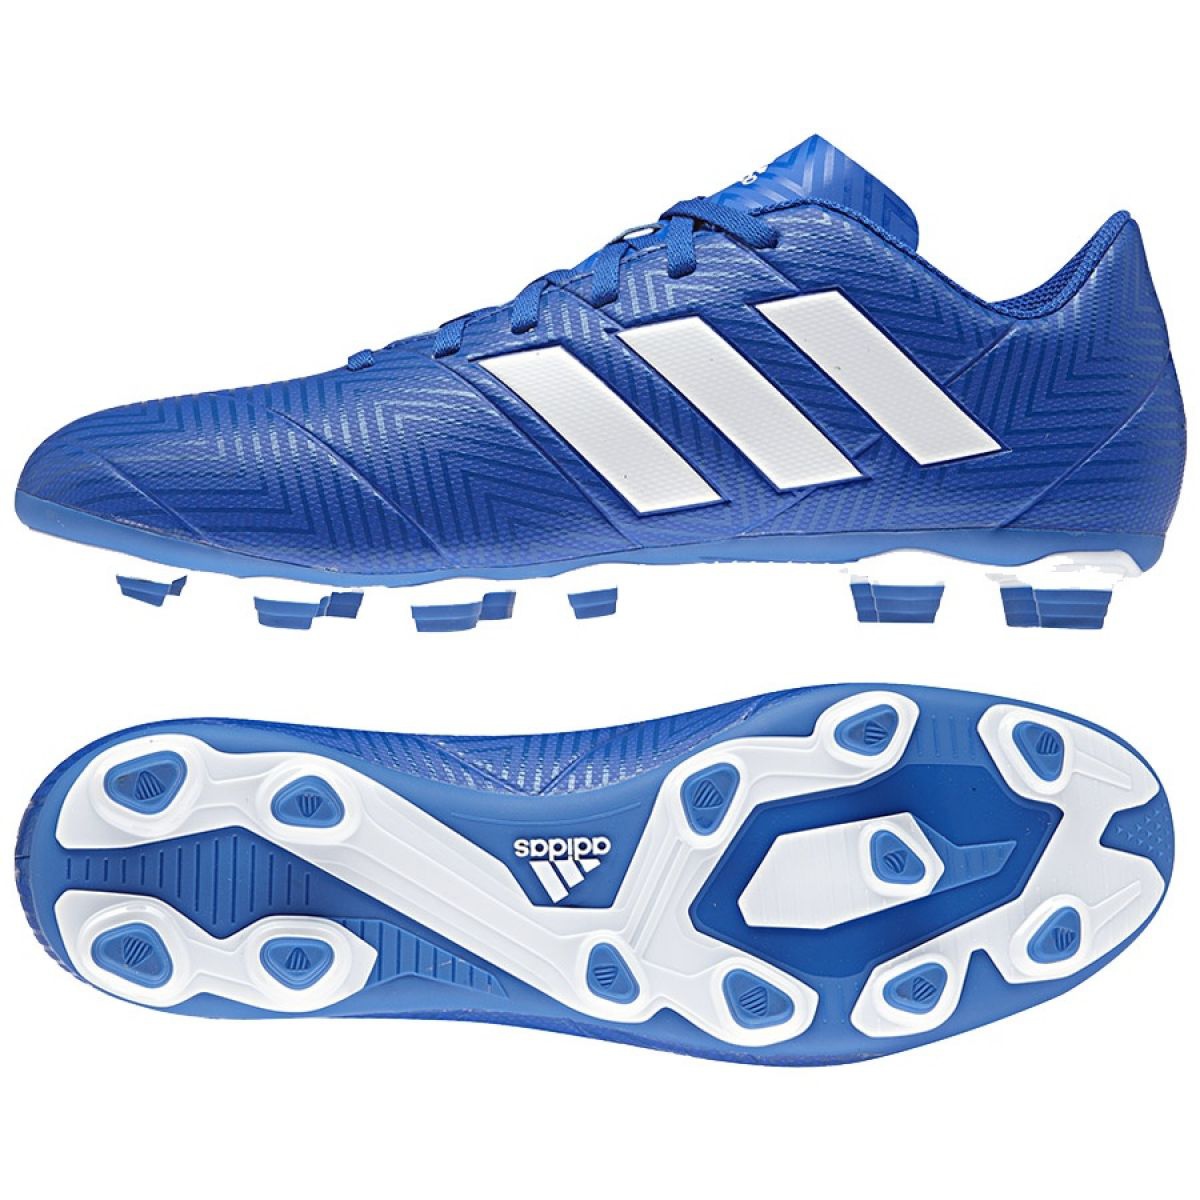 Amado rompecabezas Mentor Adidas Nemeziz 18.4 FxG M DB2115 football boots blue multicolored - KeeShoes